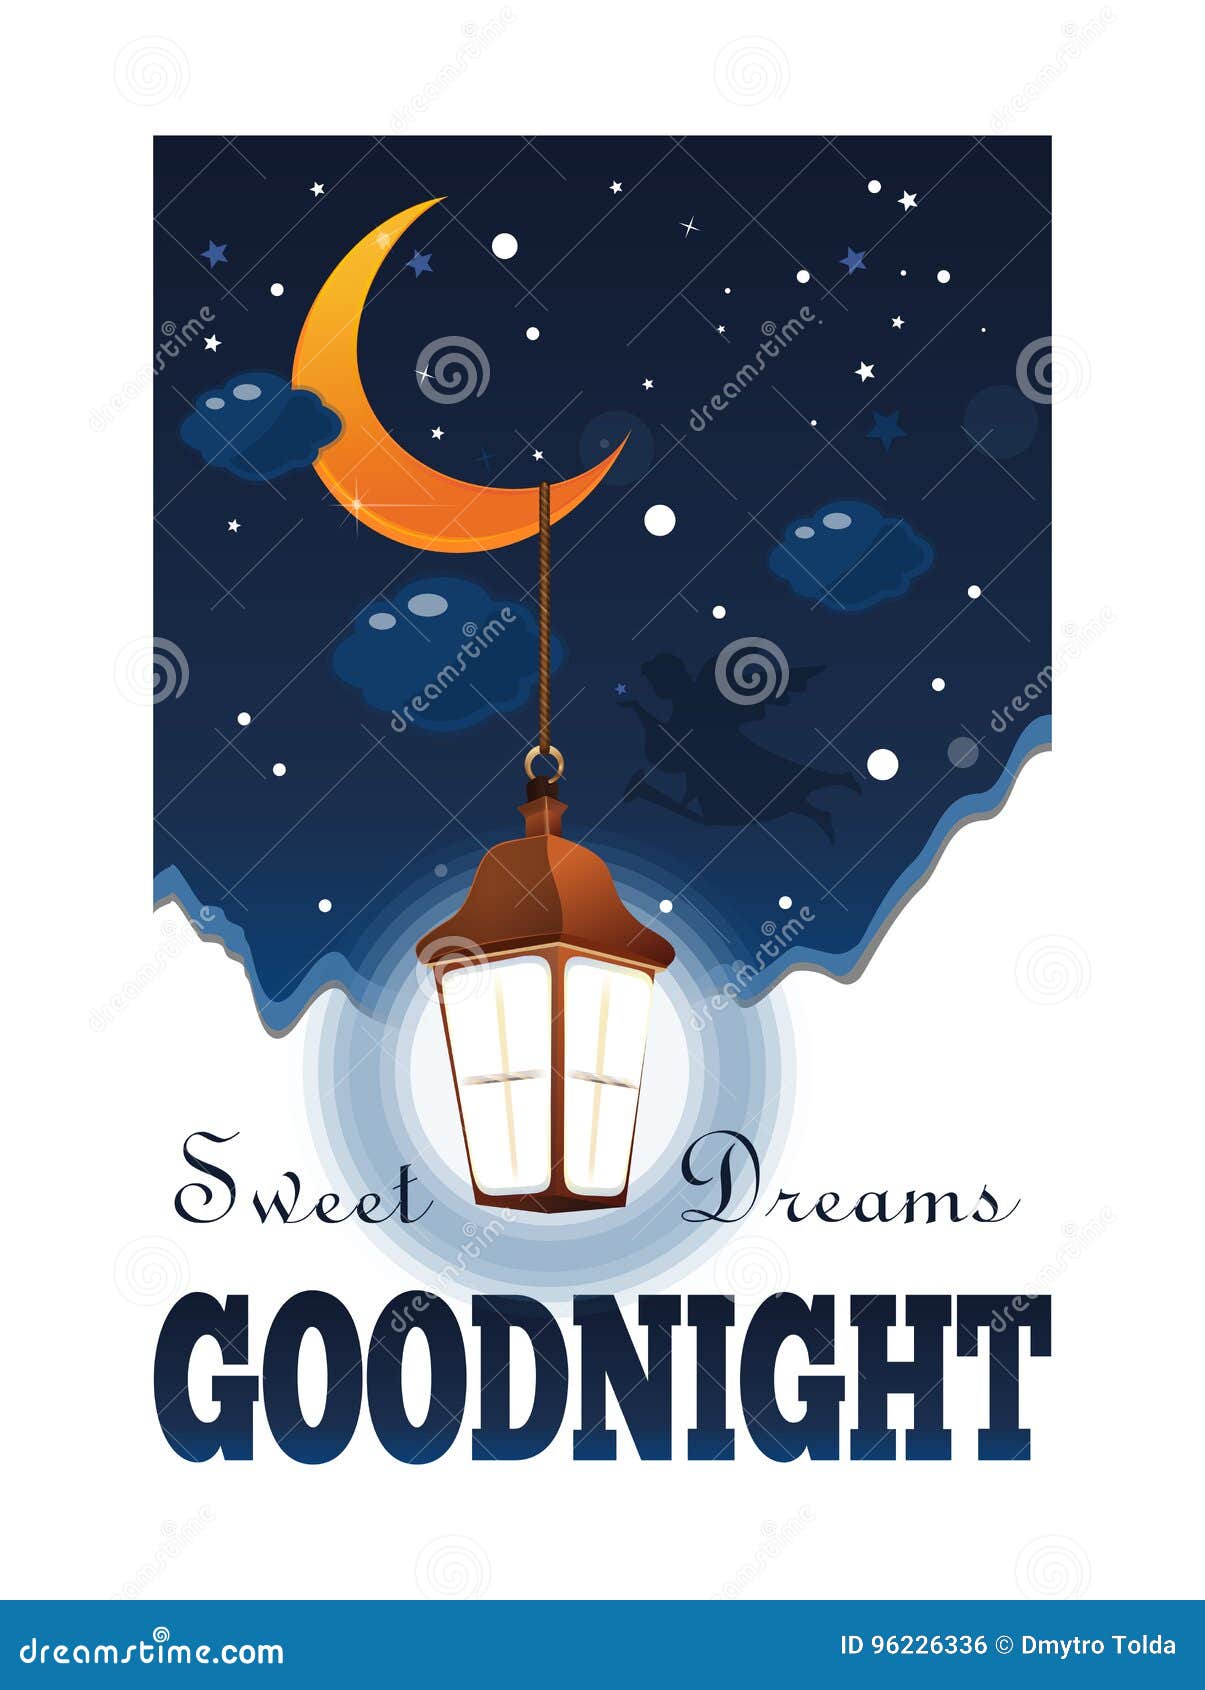 Goodnight Stock Illustrations 1 552 Goodnight Stock Illustrations Vectors Clipart Dreamstime